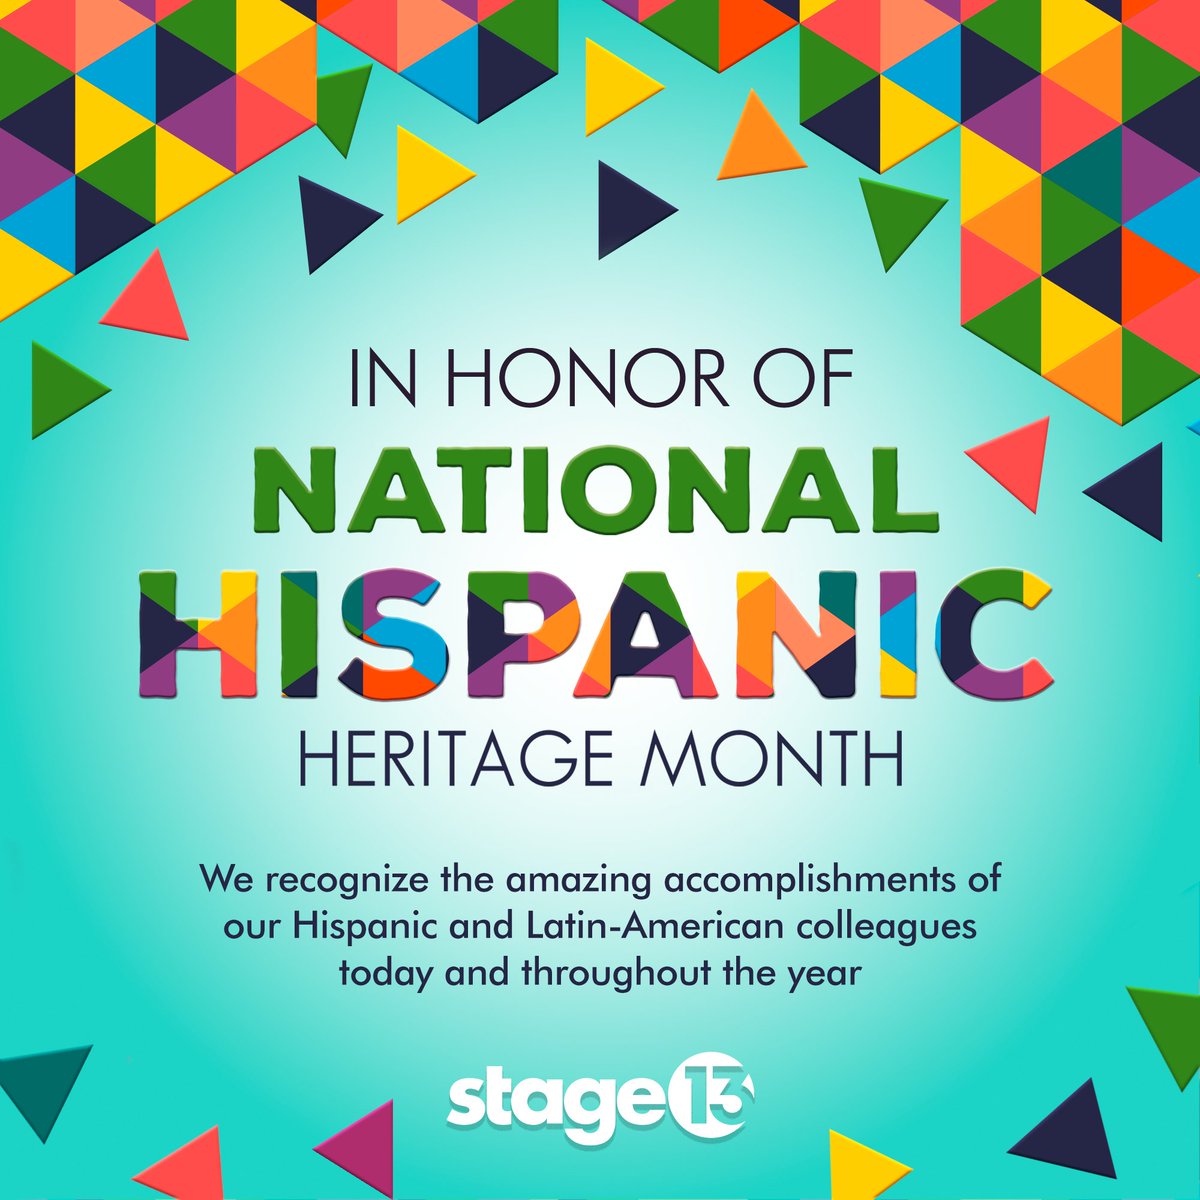 Happy National Hispanic Heritage Month! #hispanicheritagemonth